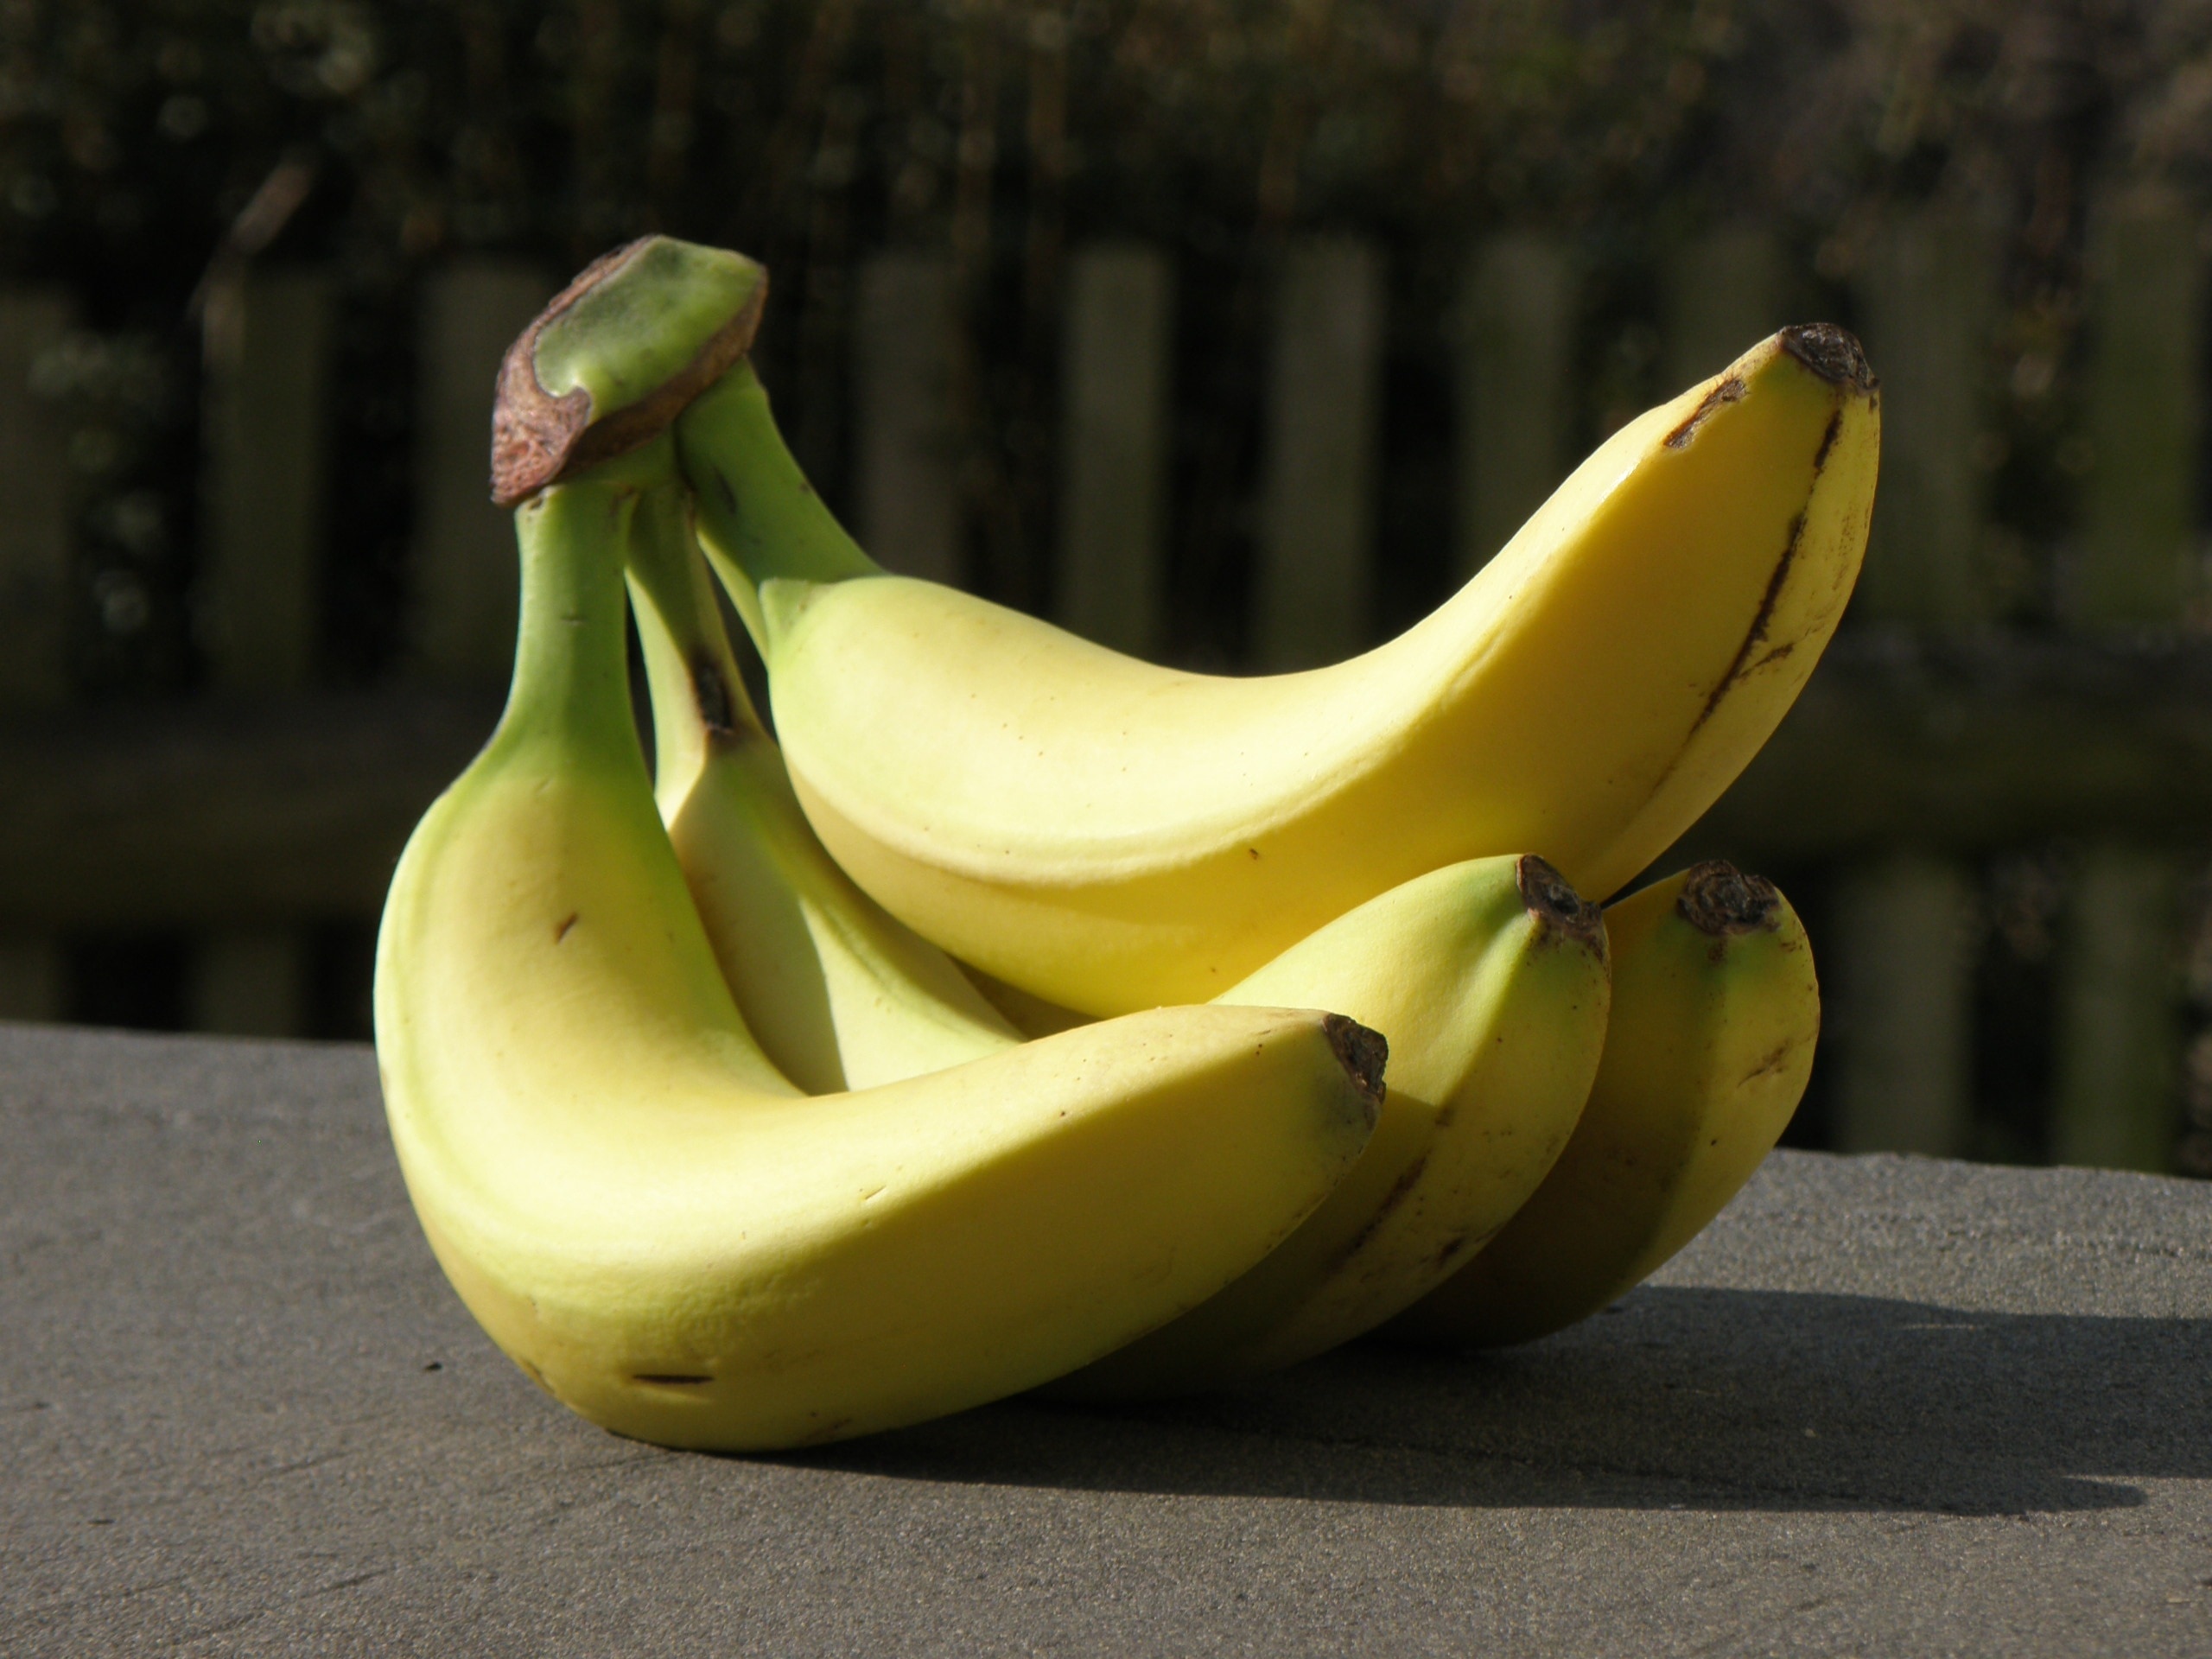 yellow banana fruits